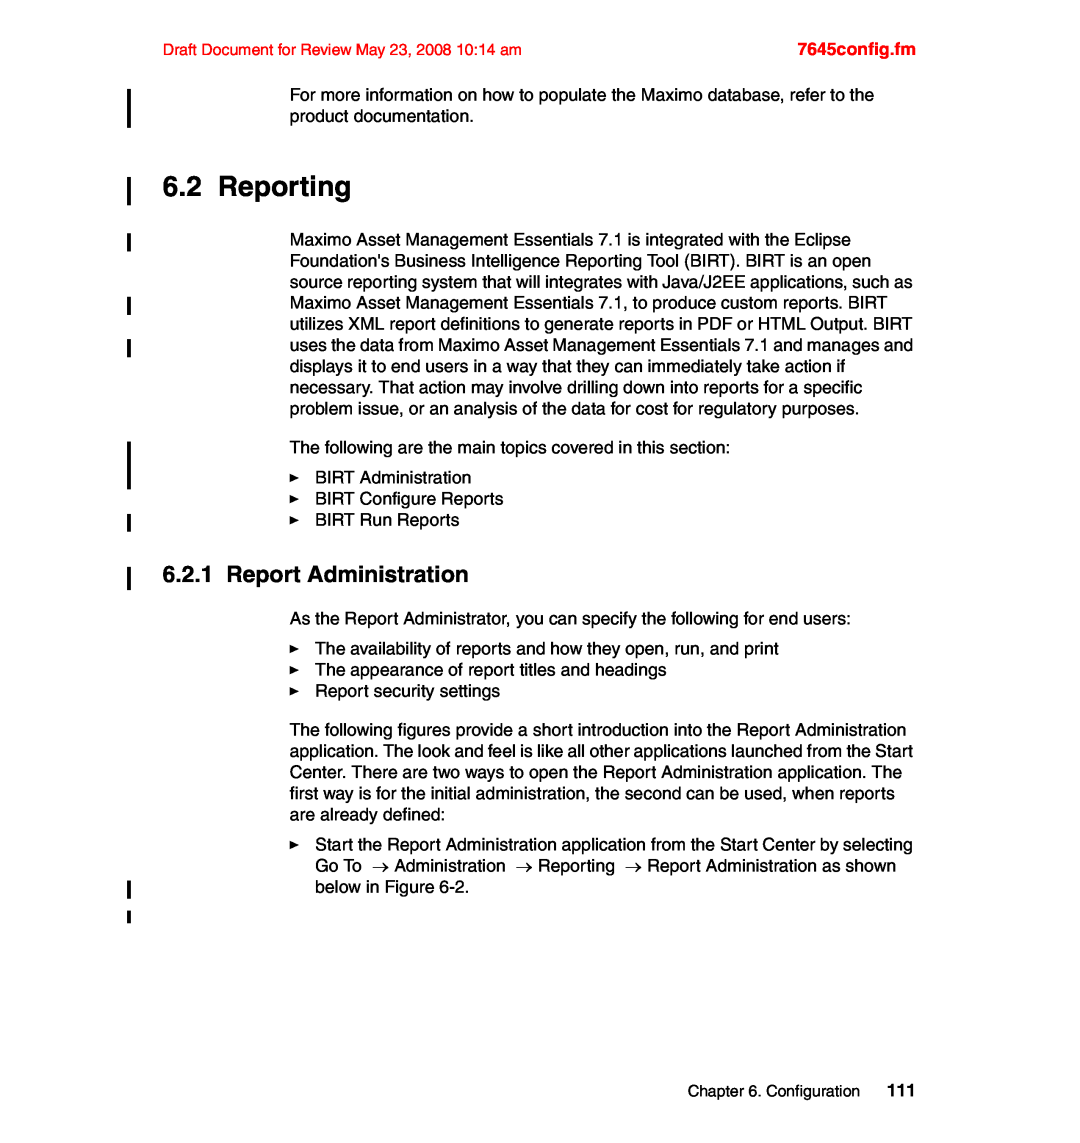 IBM SG24-7645-00 manual Reporting, 6.2.1Report Administration, 7645config.fm 